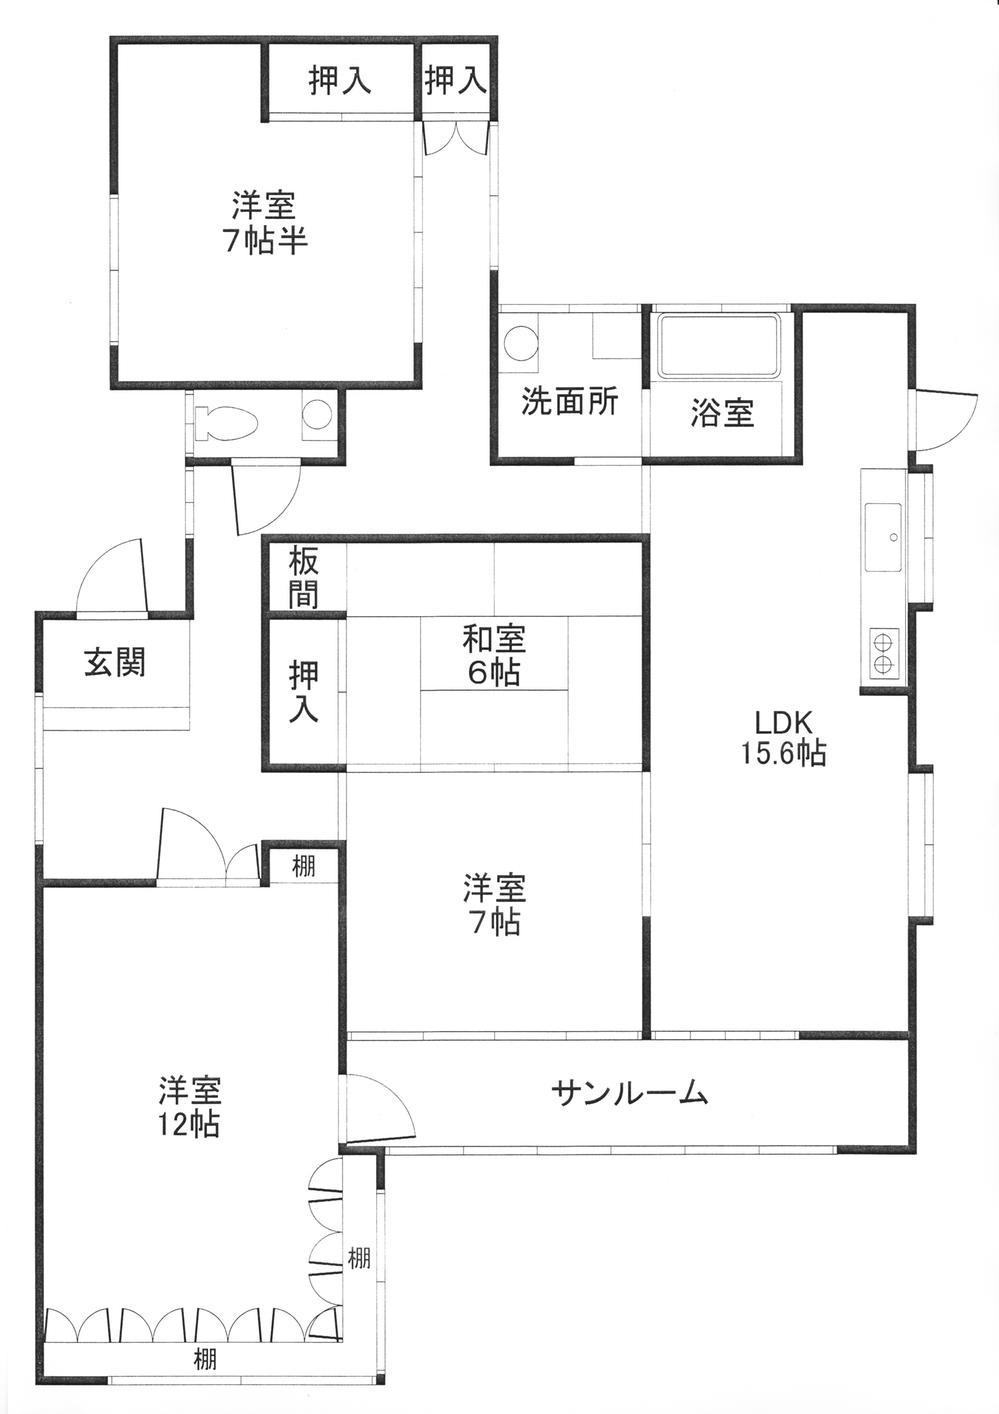 Floor plan. 16,900,000 yen, 4LDK, Land area 386.11 sq m , Building area 145.56 sq m